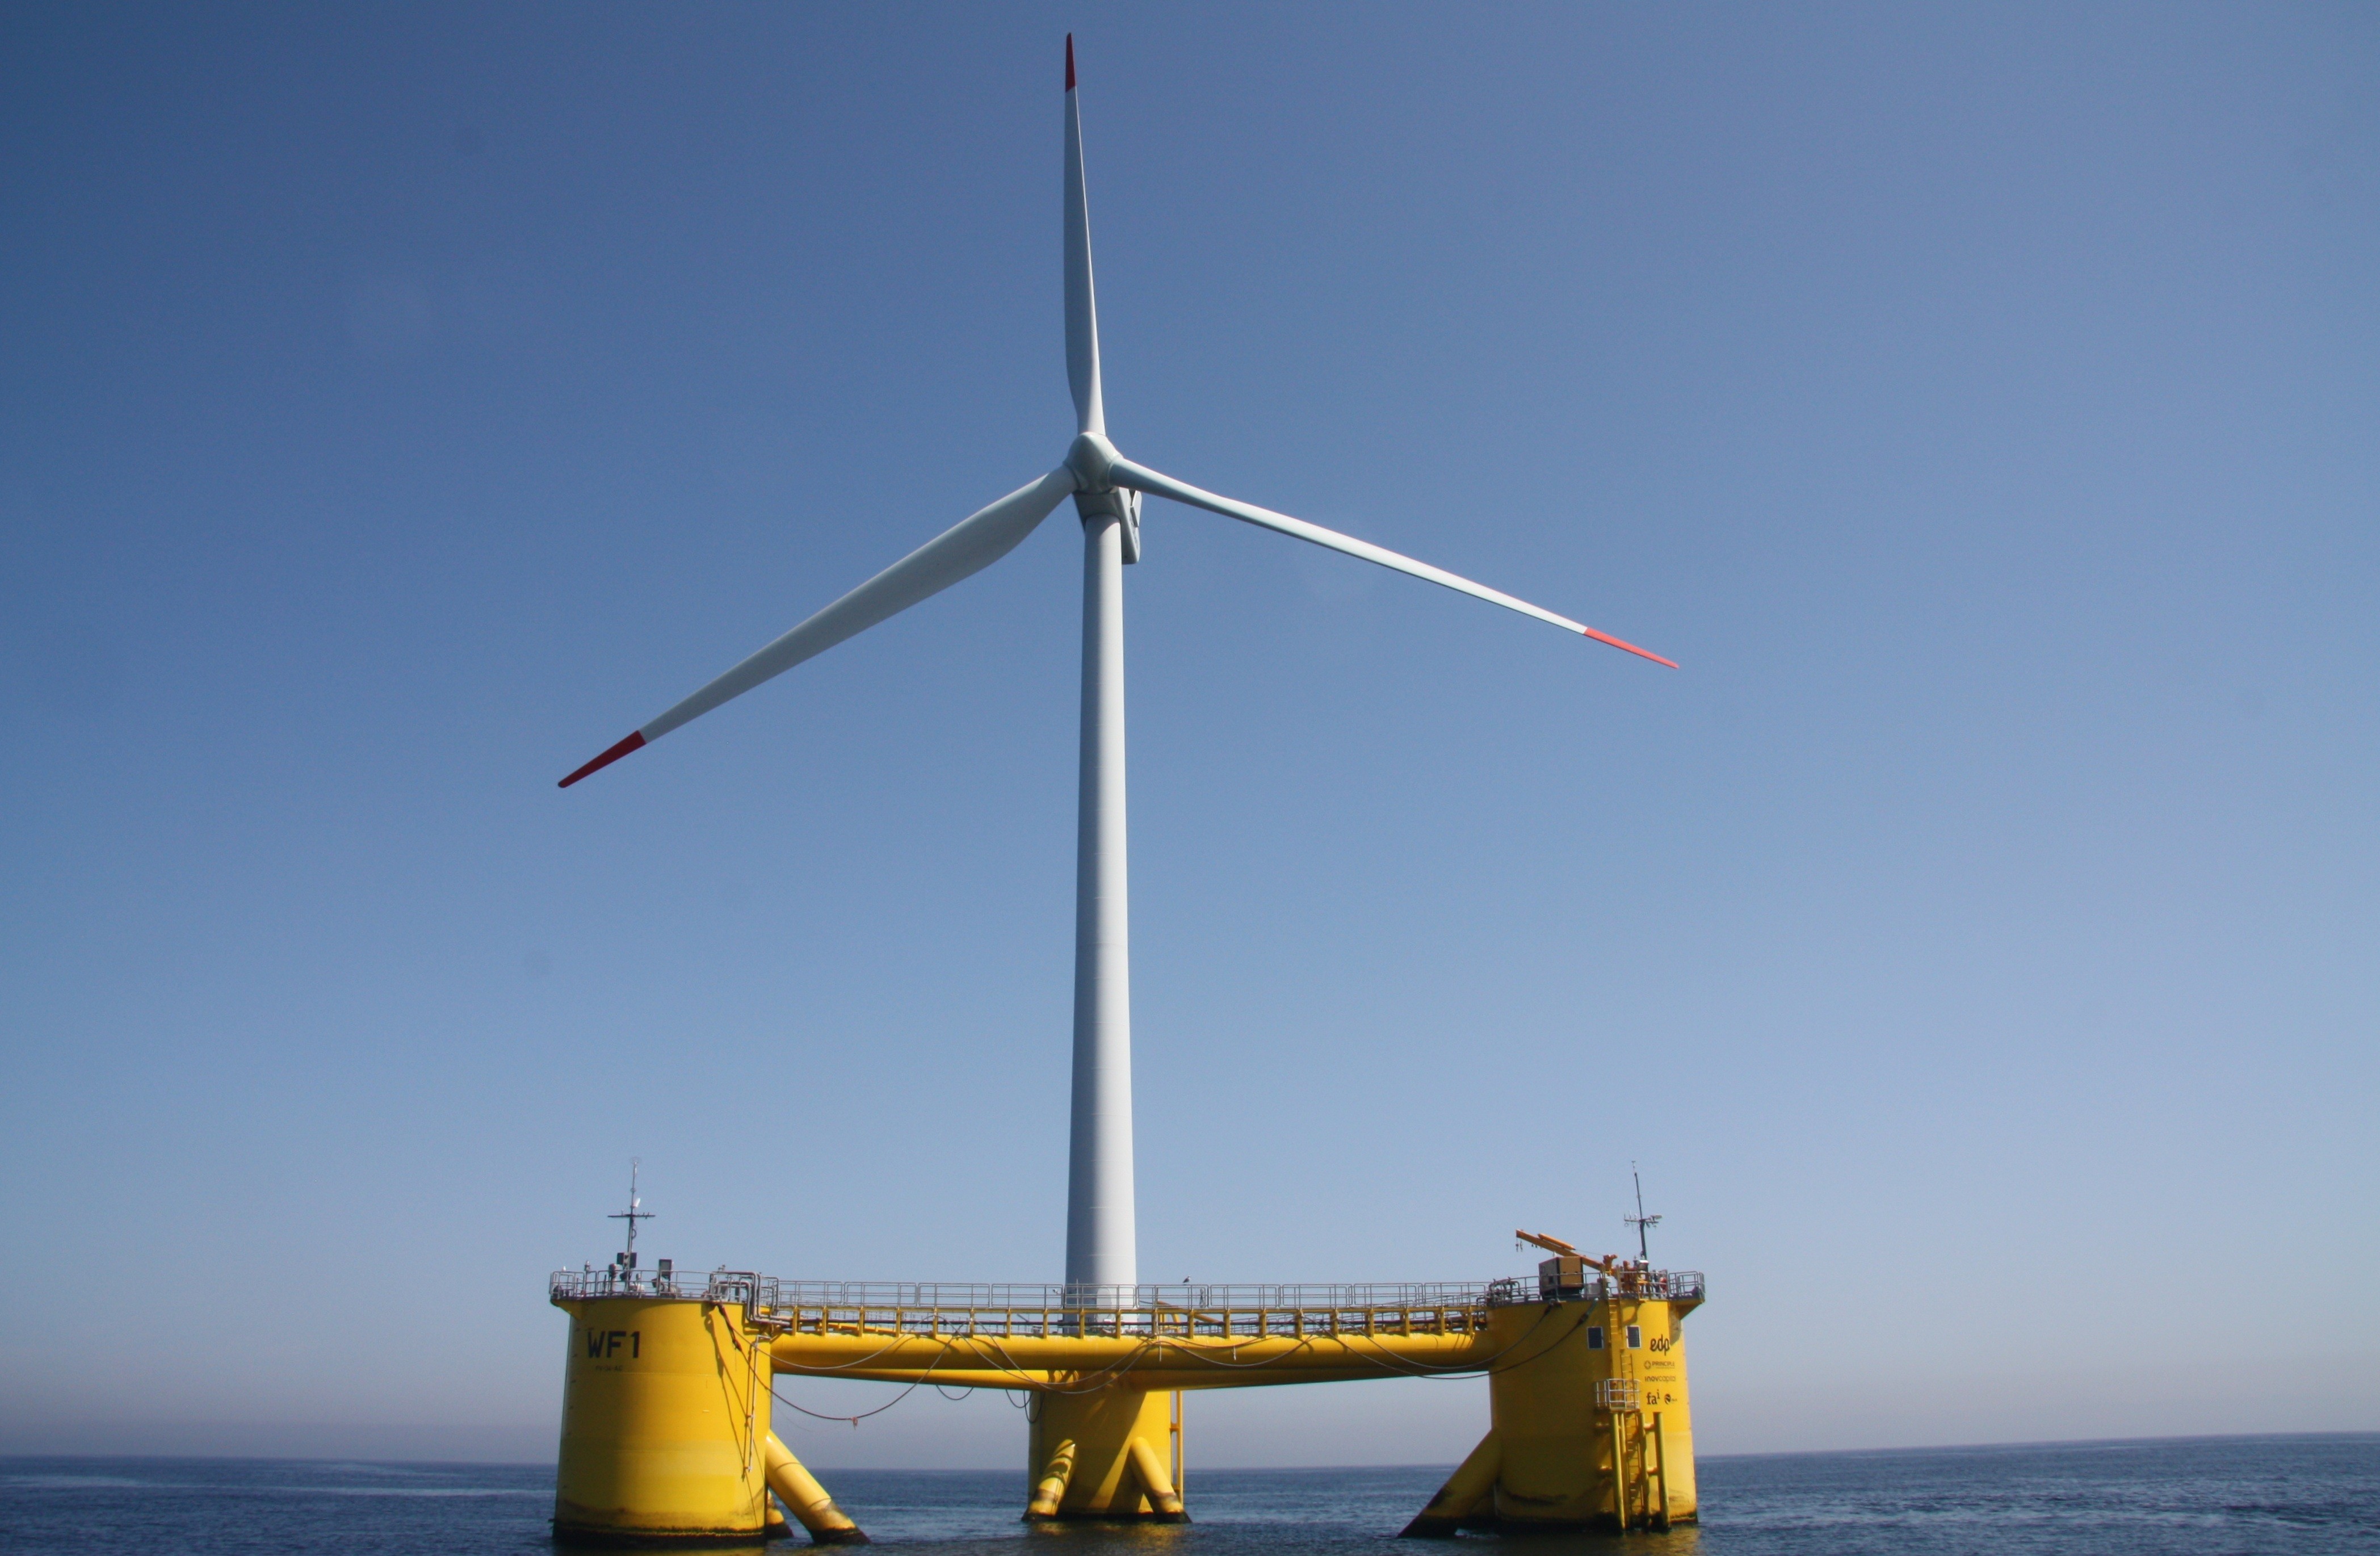 A wind turbine floating on a three-legged platform on the ocean.